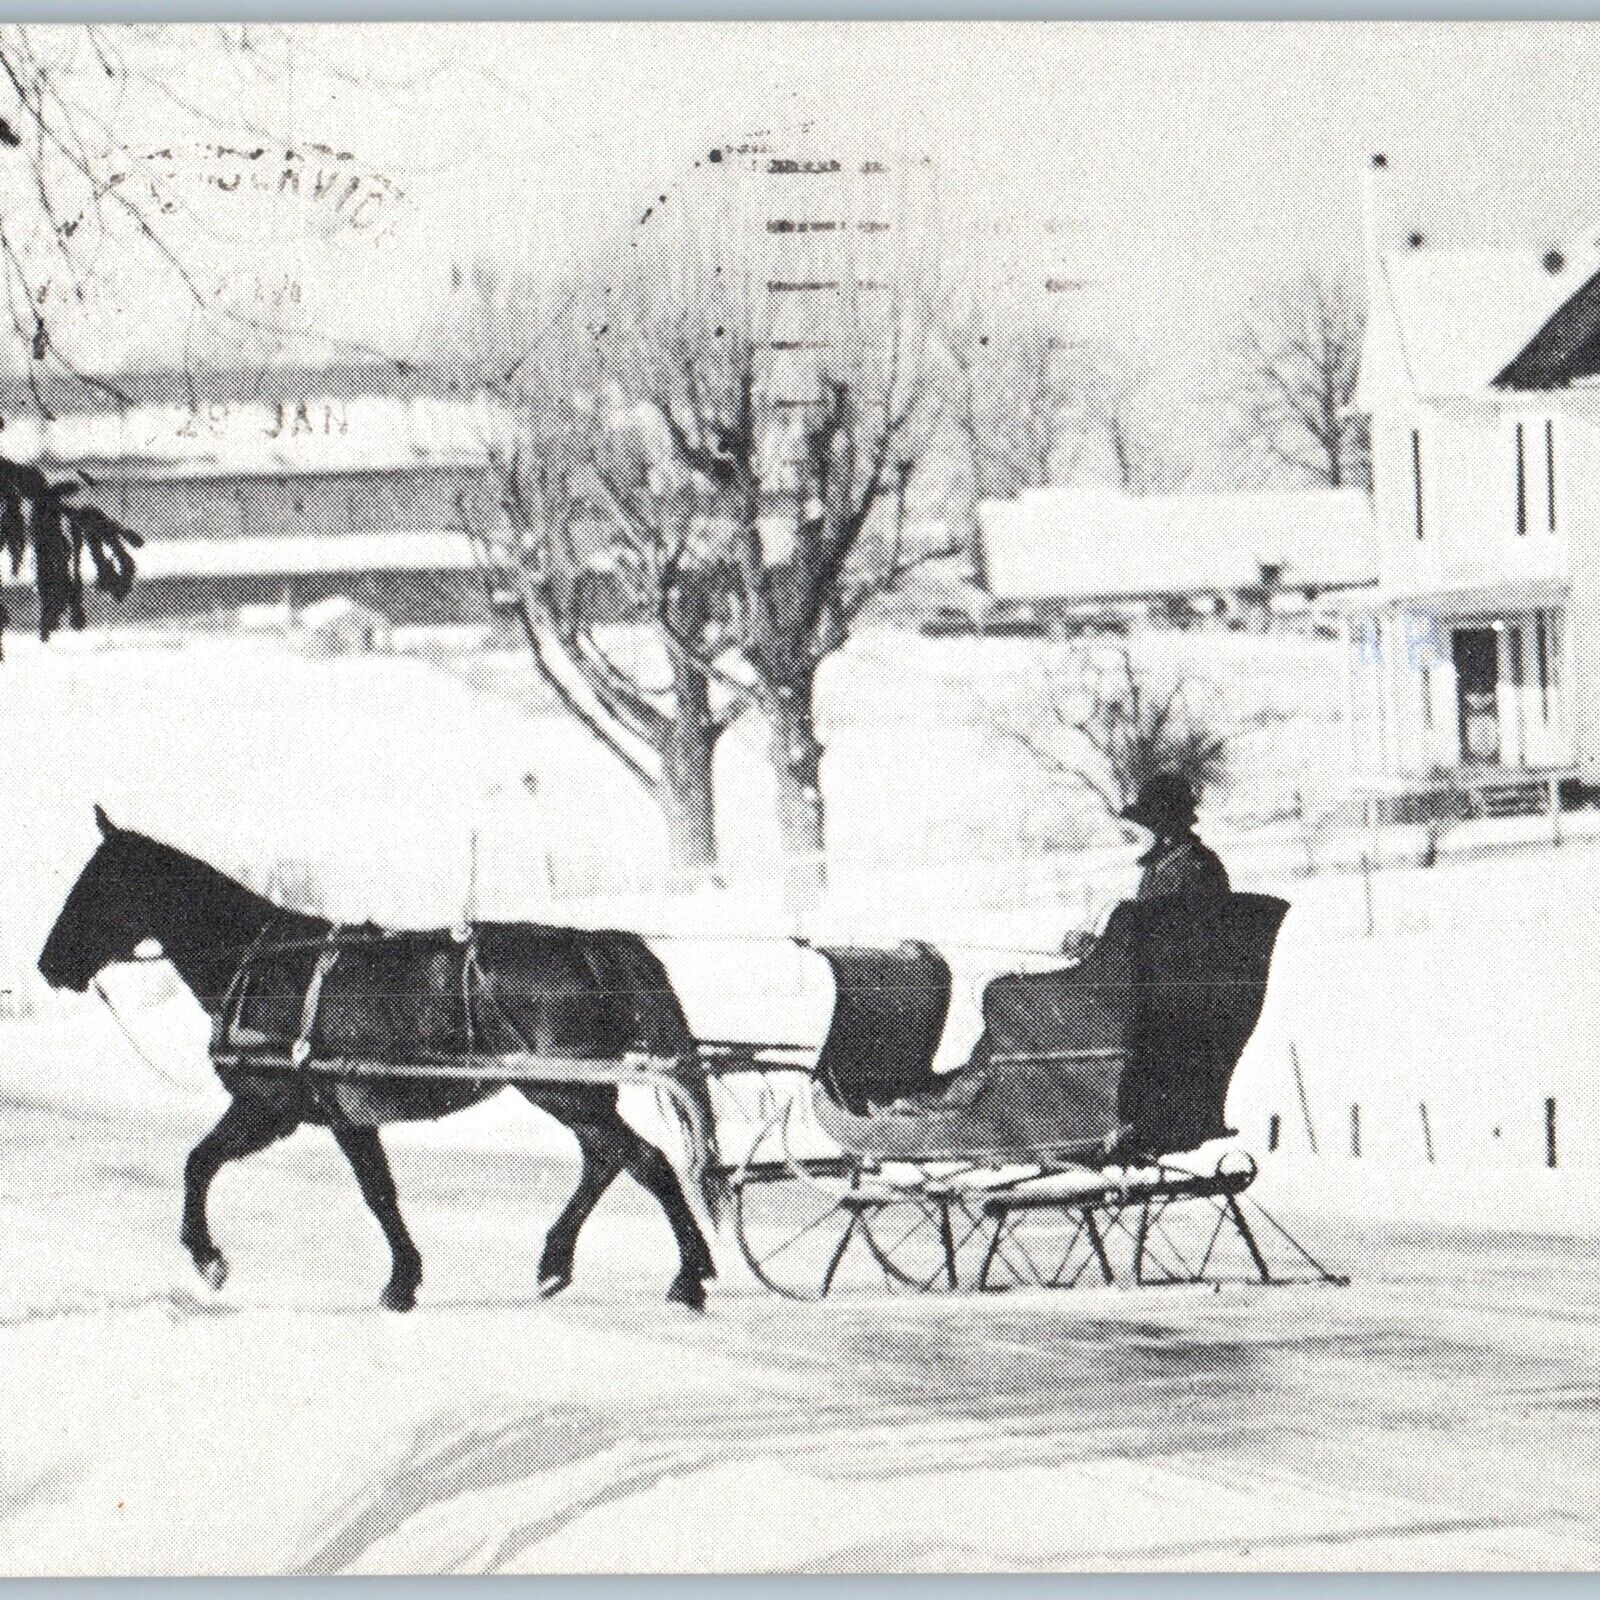 c1970s Kalona, IA Winter in Amishland Sleigh Photo Print by John Zielinski A190